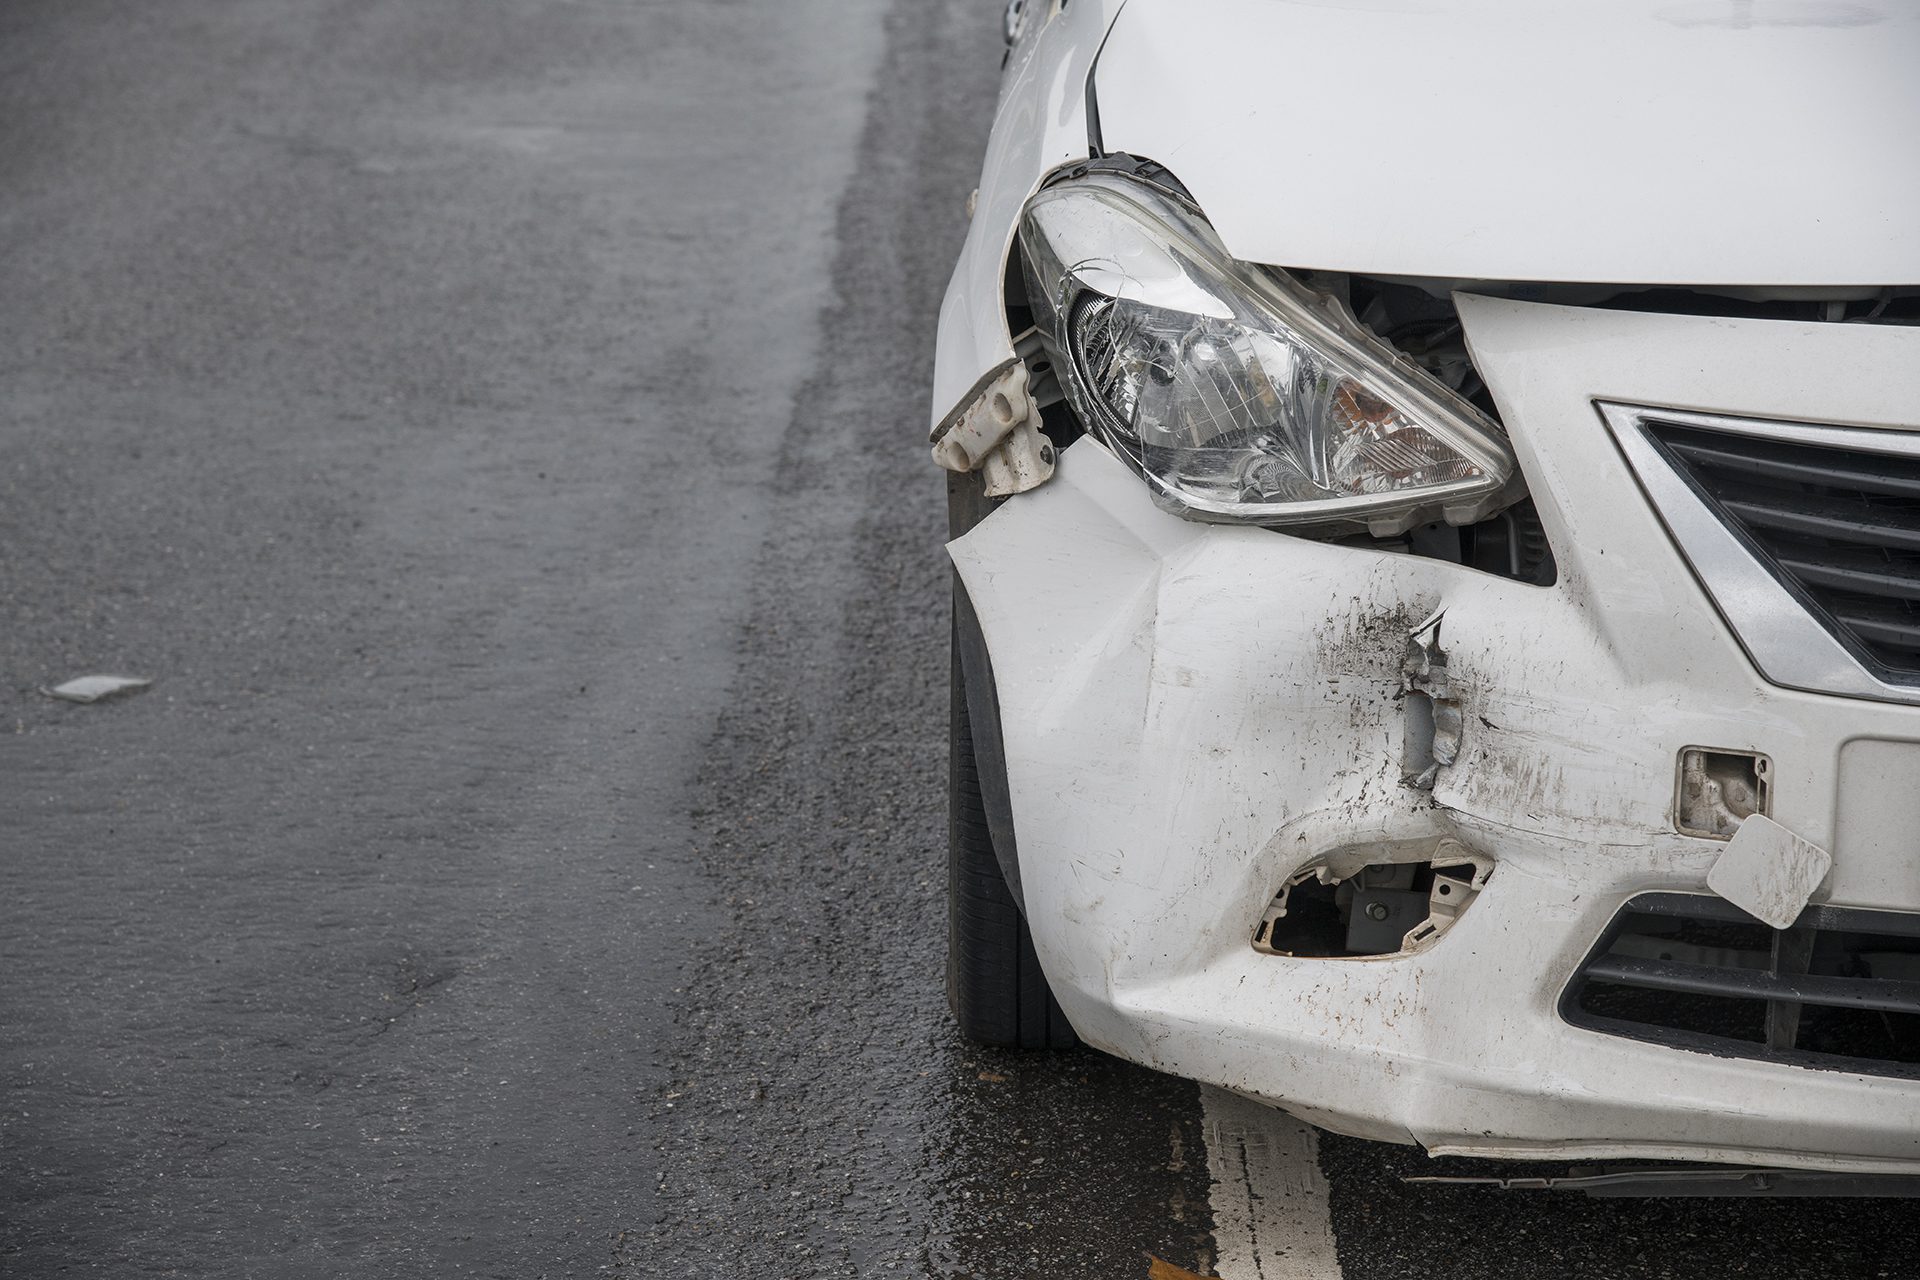 Should Bayshore Driver Get a Sentence Reduction After Deadly Crash?